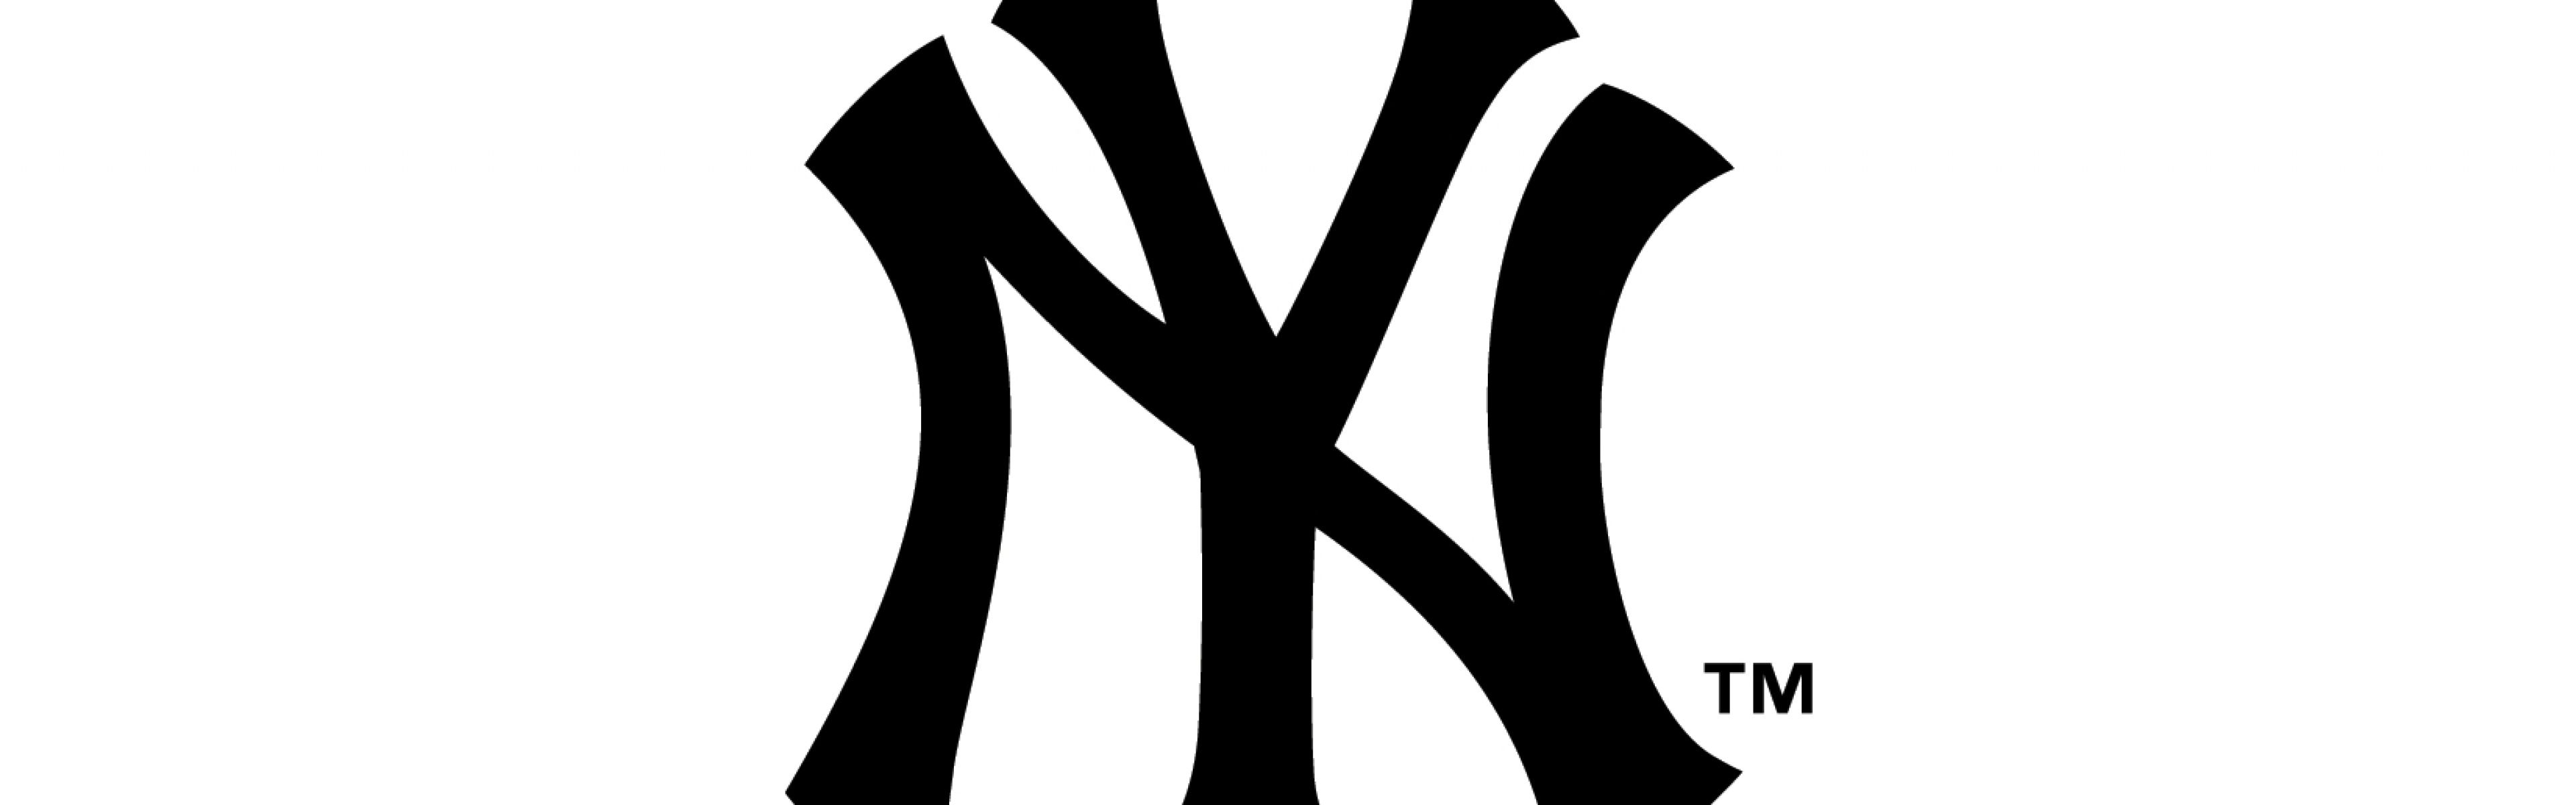 Download Wallpaper 3840x1200 New york yankees, Logo, Famous brand ...